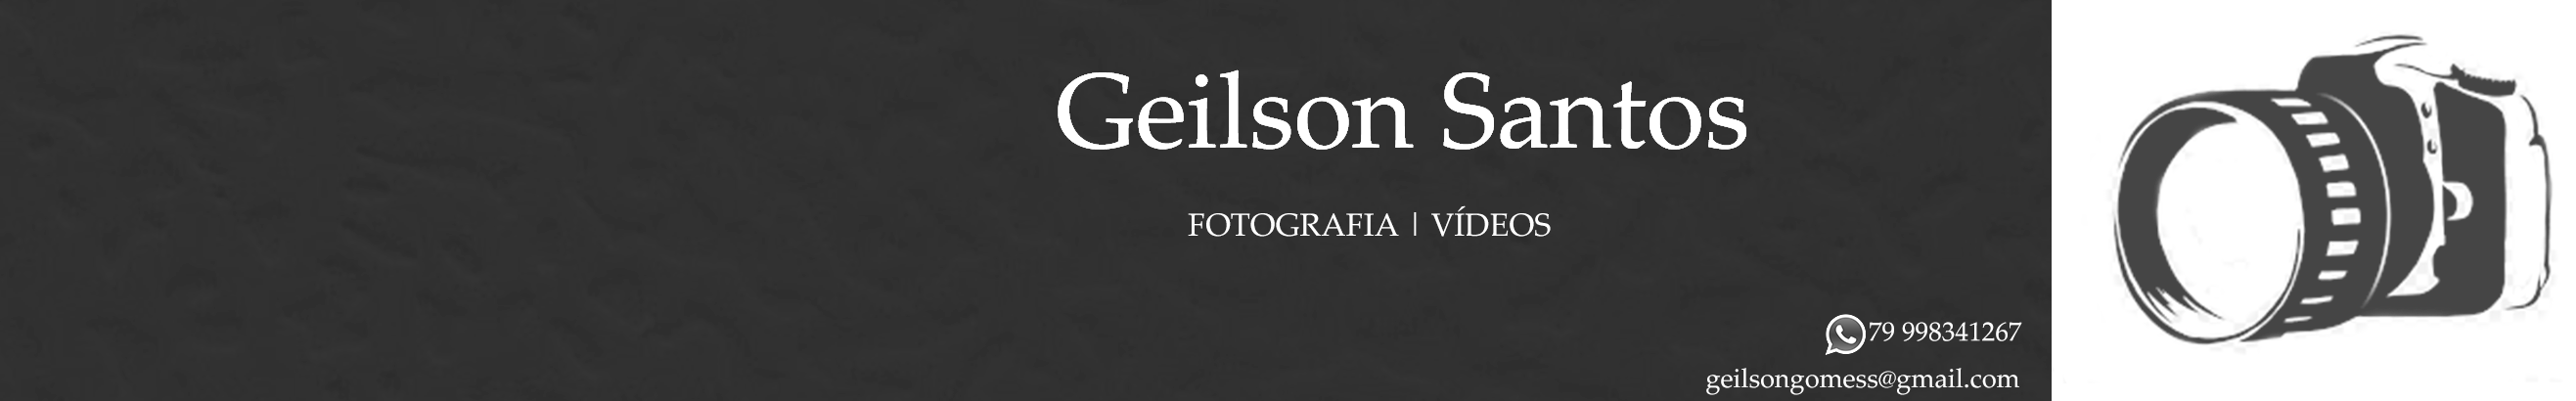 Banner profilu uživatele Geilson Santos